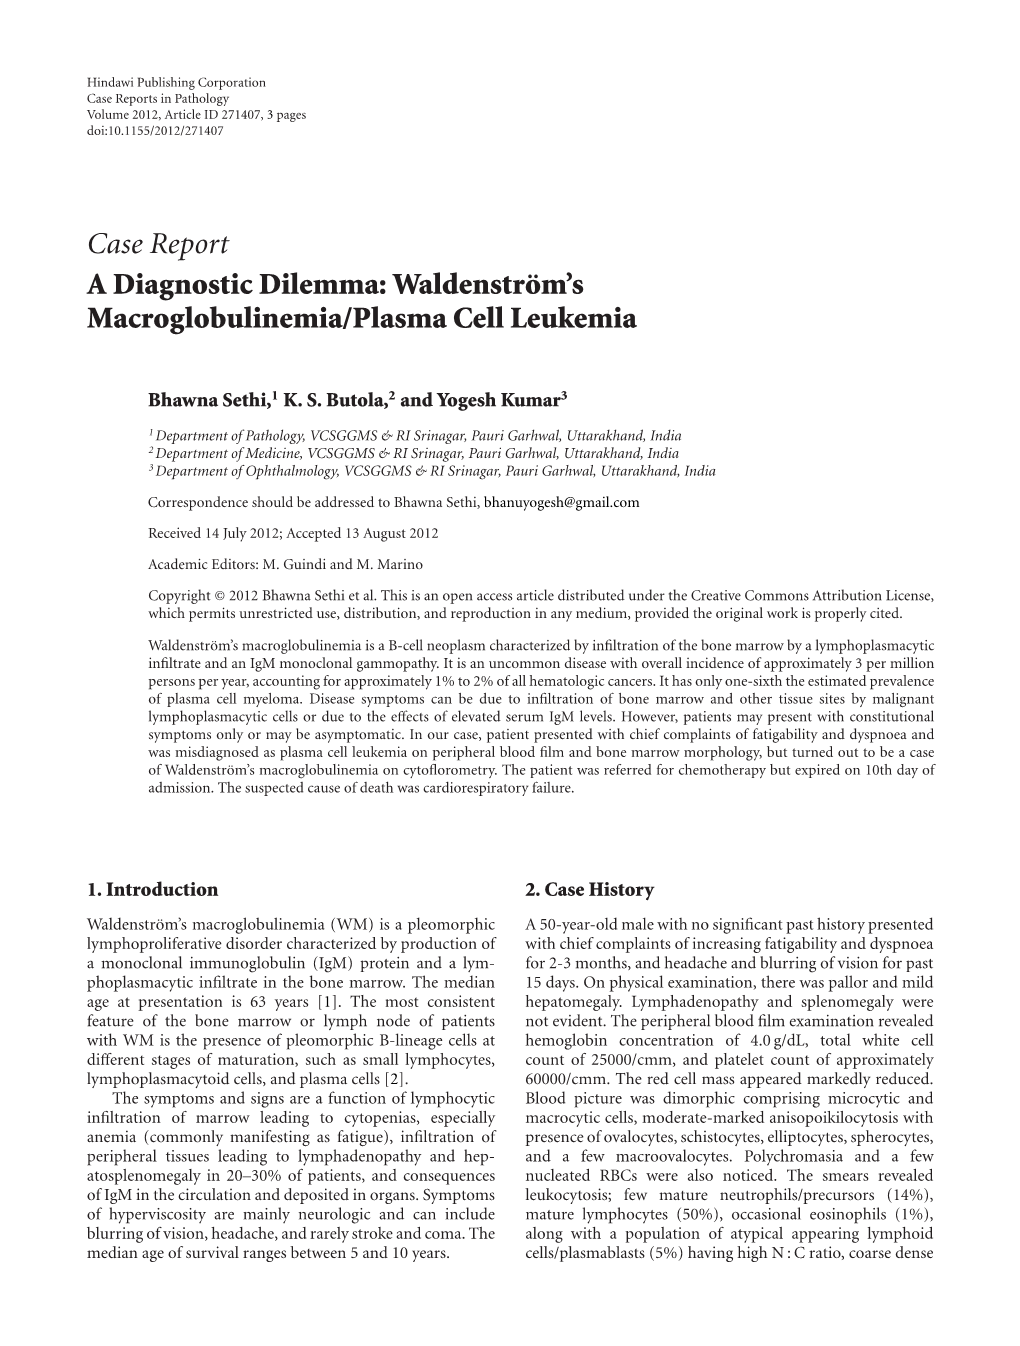 A Diagnostic Dilemma: Waldenström's Macroglobulinemia/Plasma Cell